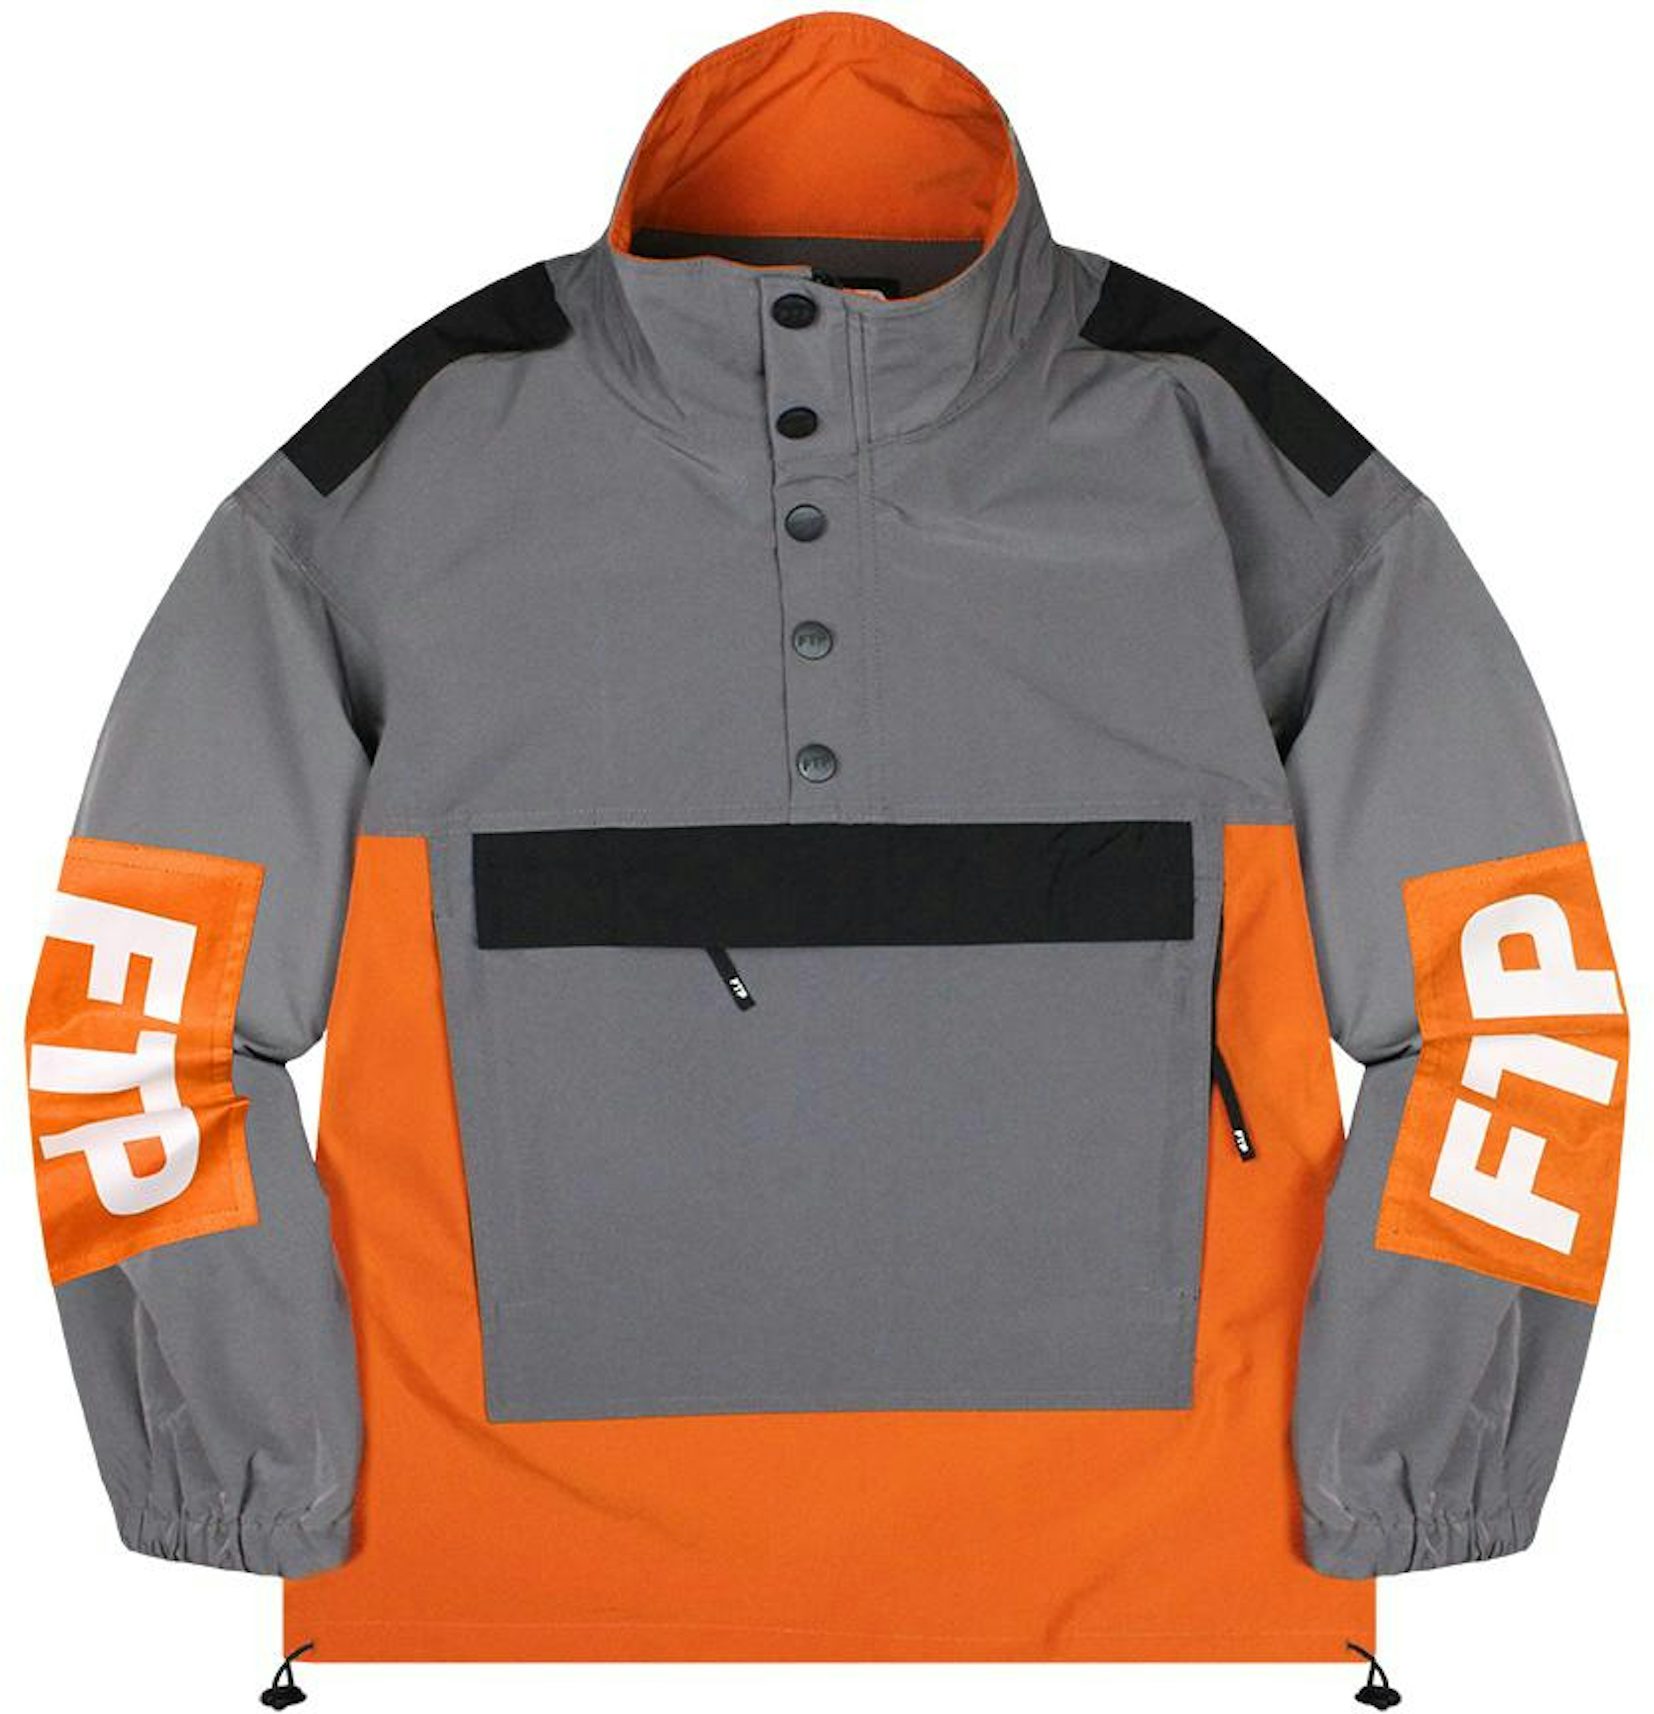 FTP Vertical Waterproof Jacket Charcoal メンズ - FW19 - JP